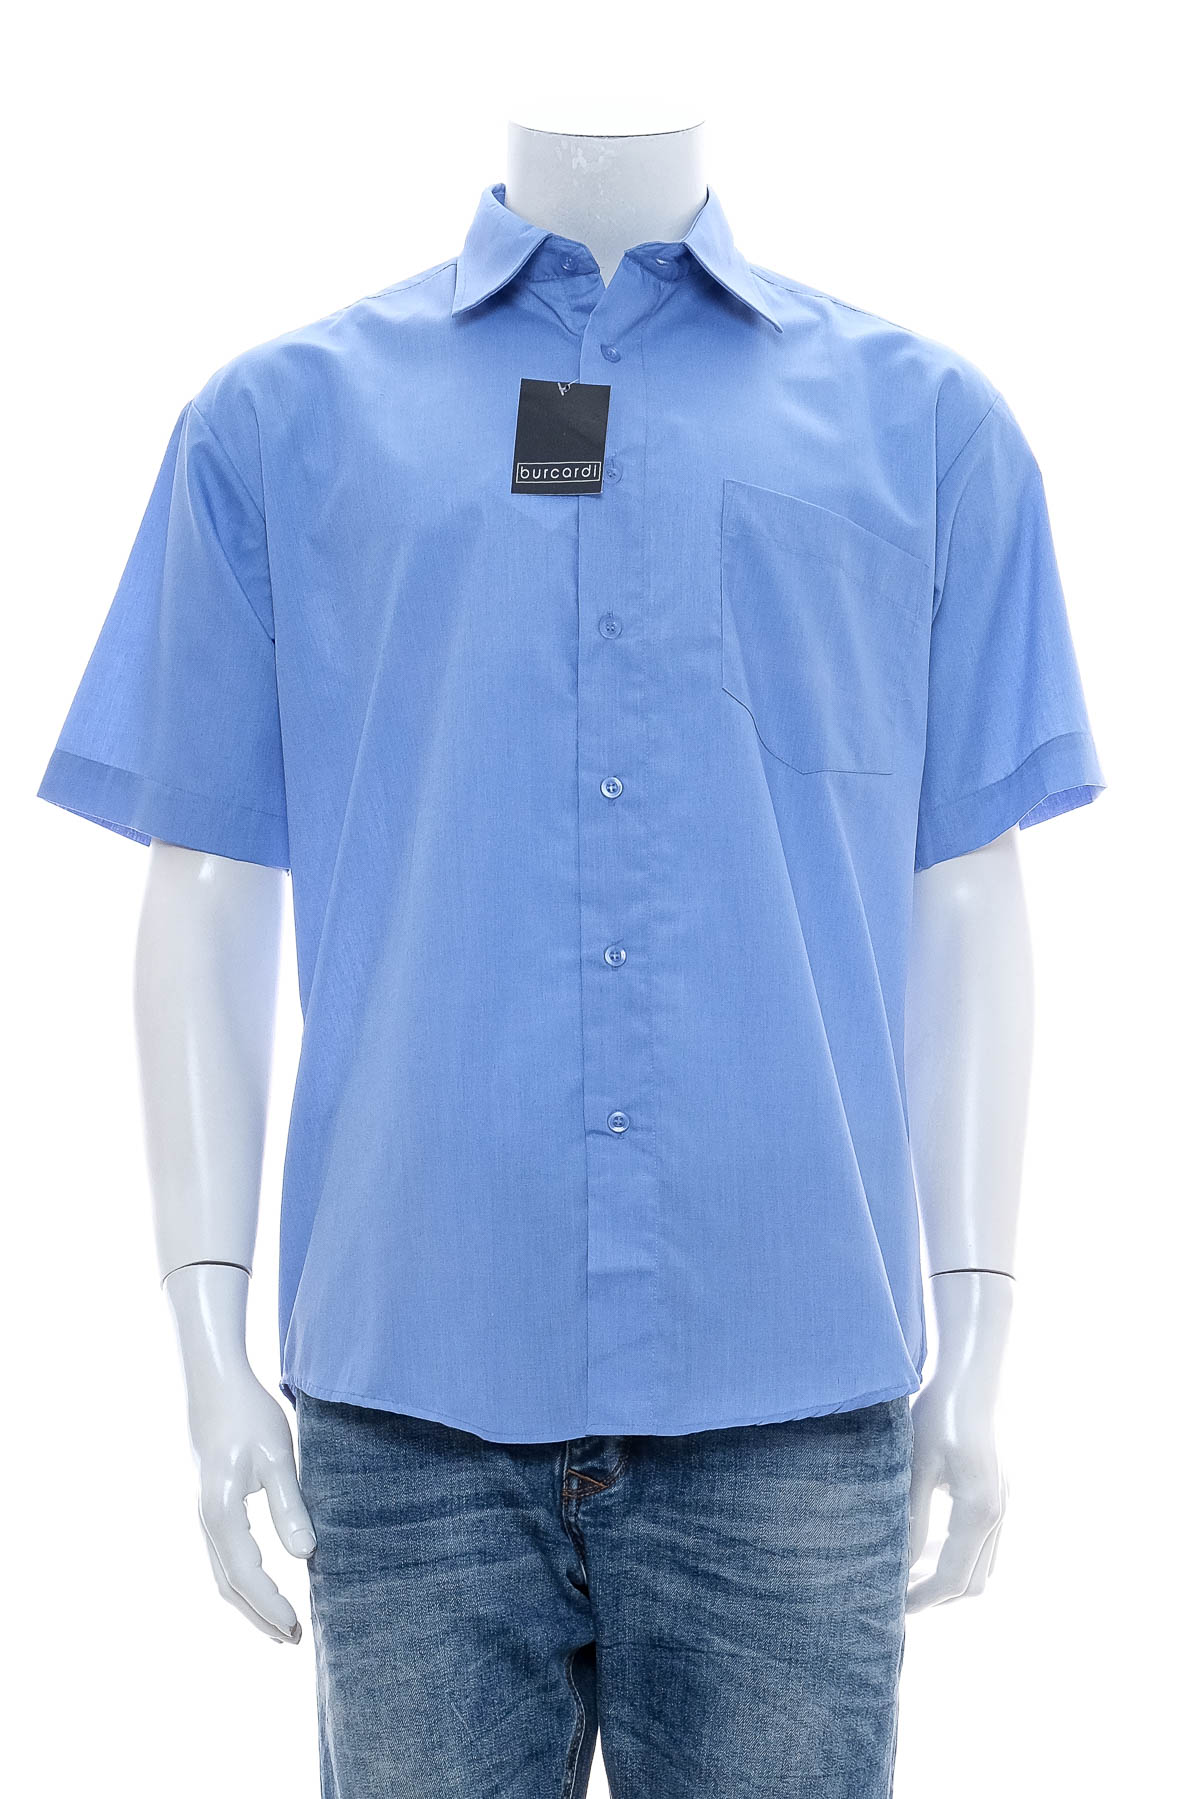 Men's shirt - Burcardi - 0